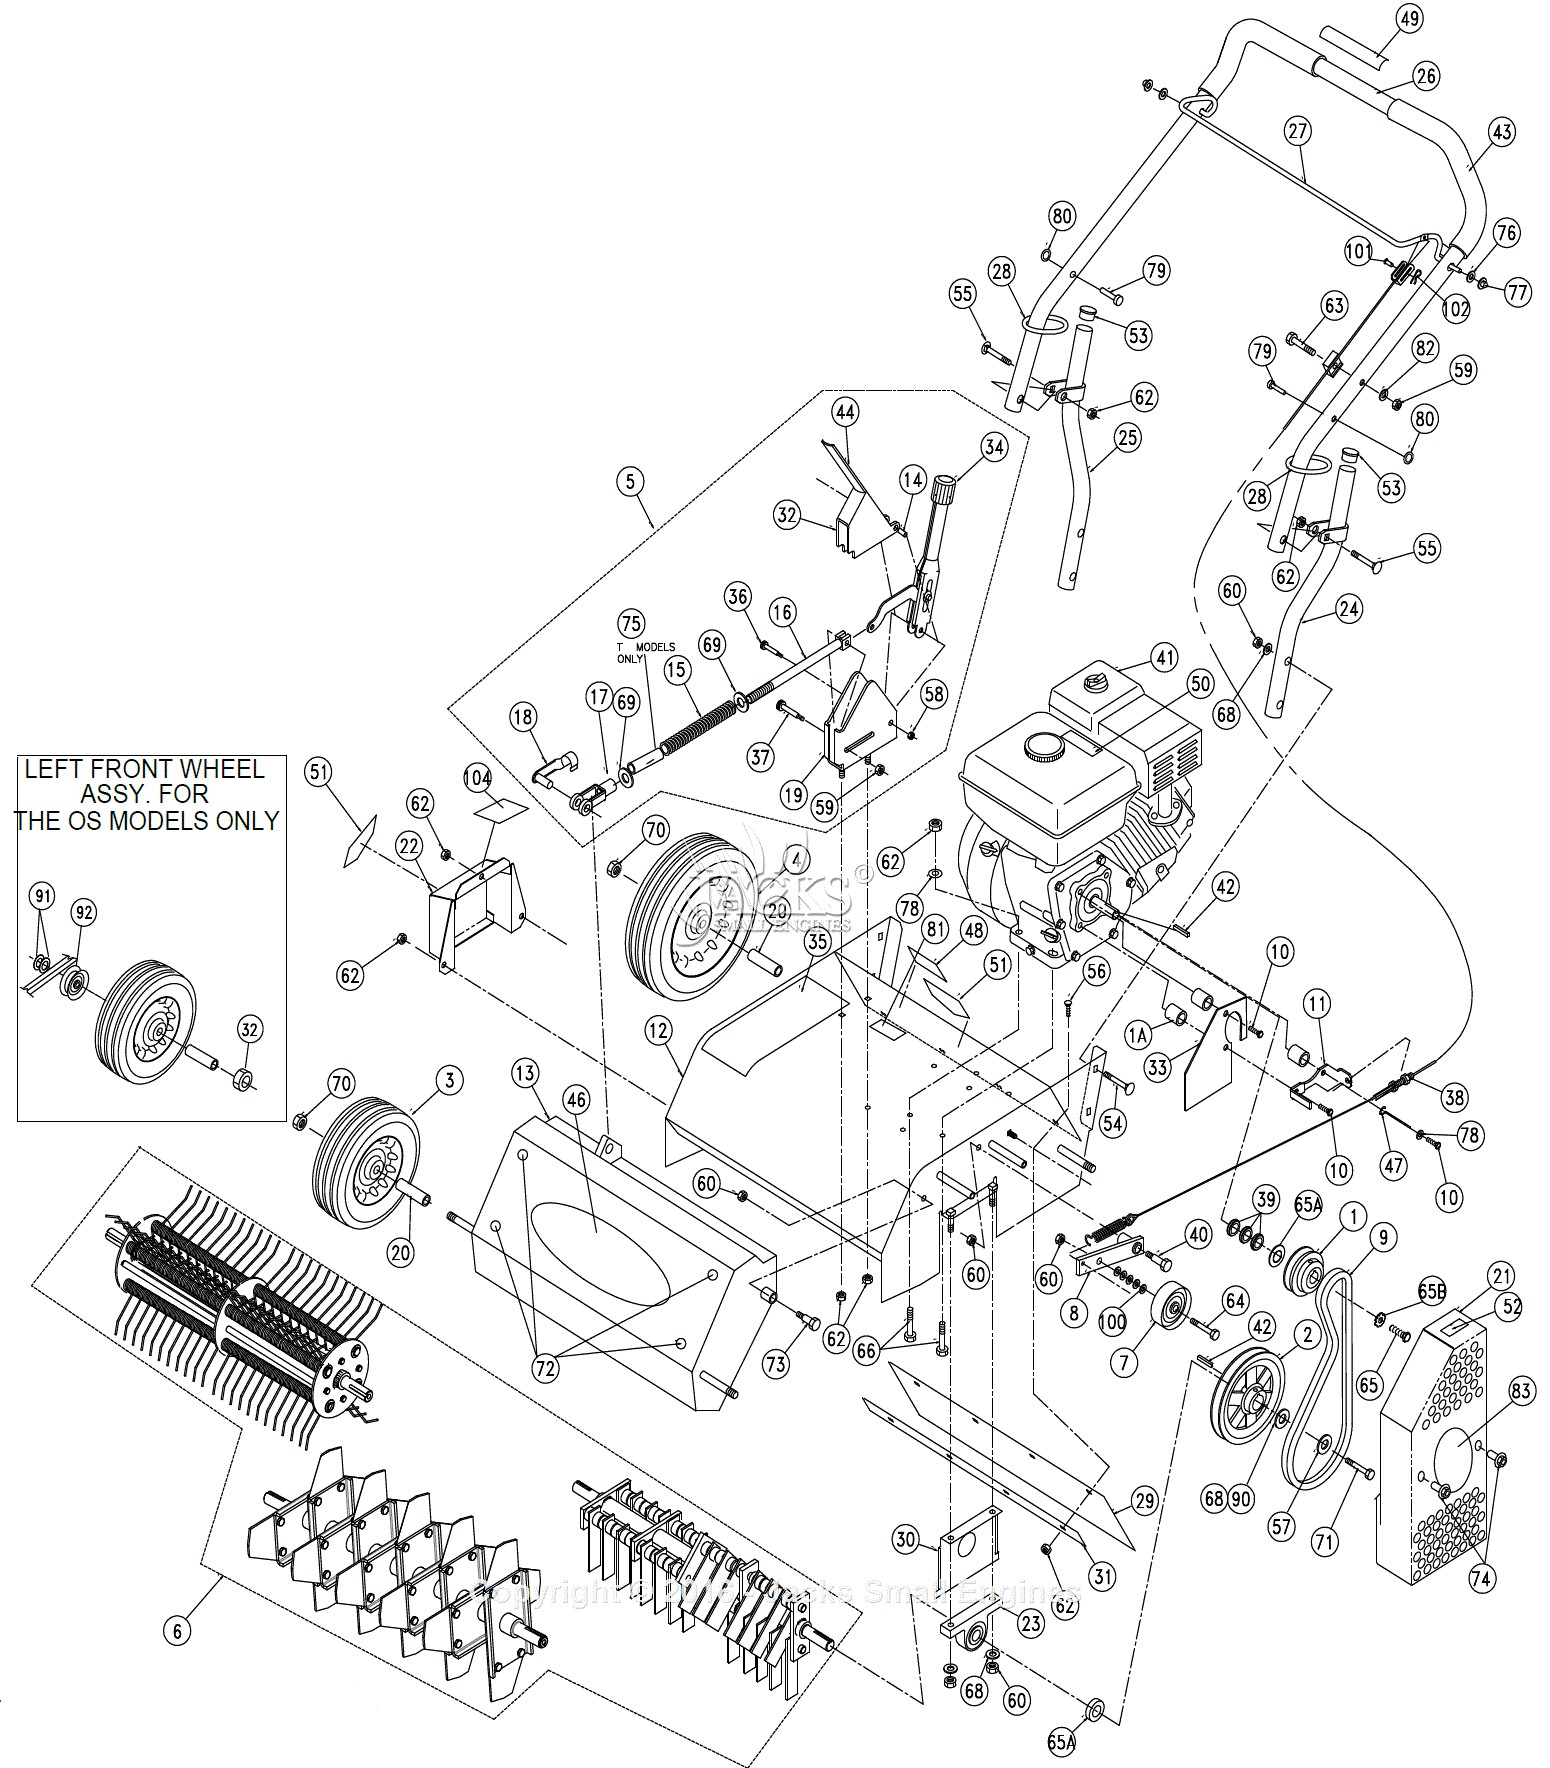 Honda Elite 80 Parts Diagram Billy Goat Pr550 Parts Diagram for Main assembly Of Honda Elite 80 Parts Diagram